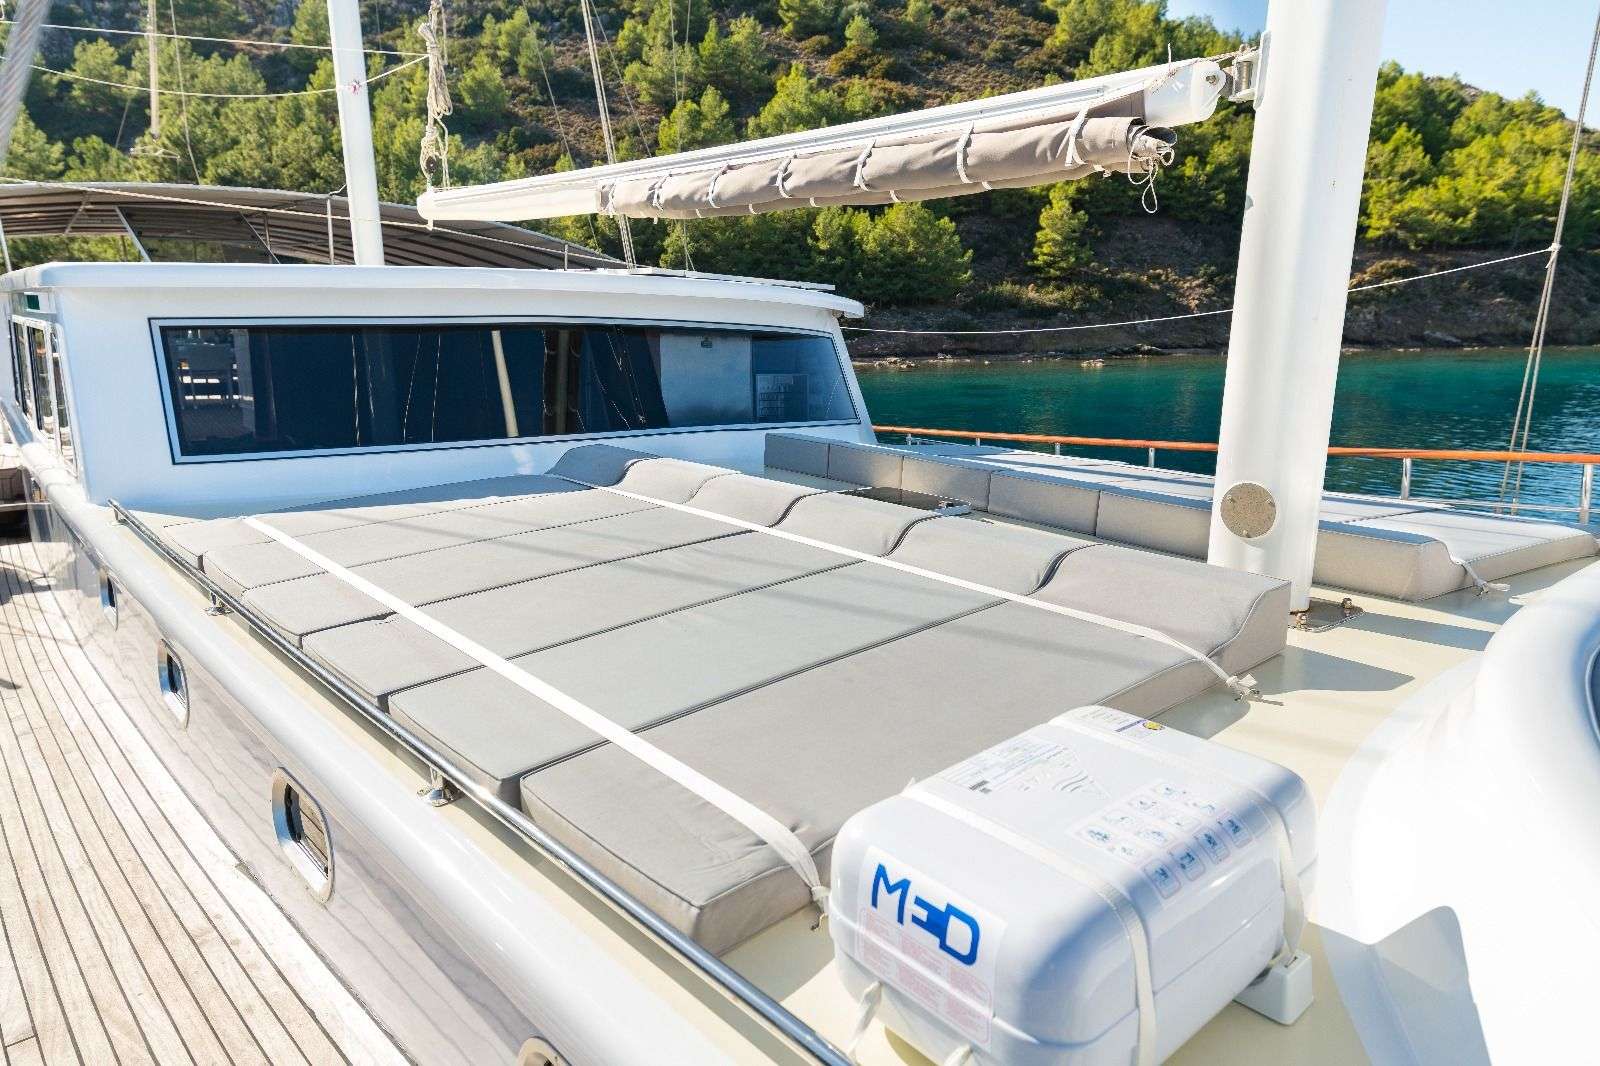 koray ege - Yacht Charter Porto Koufo & Boat hire in Greece & Turkey 3